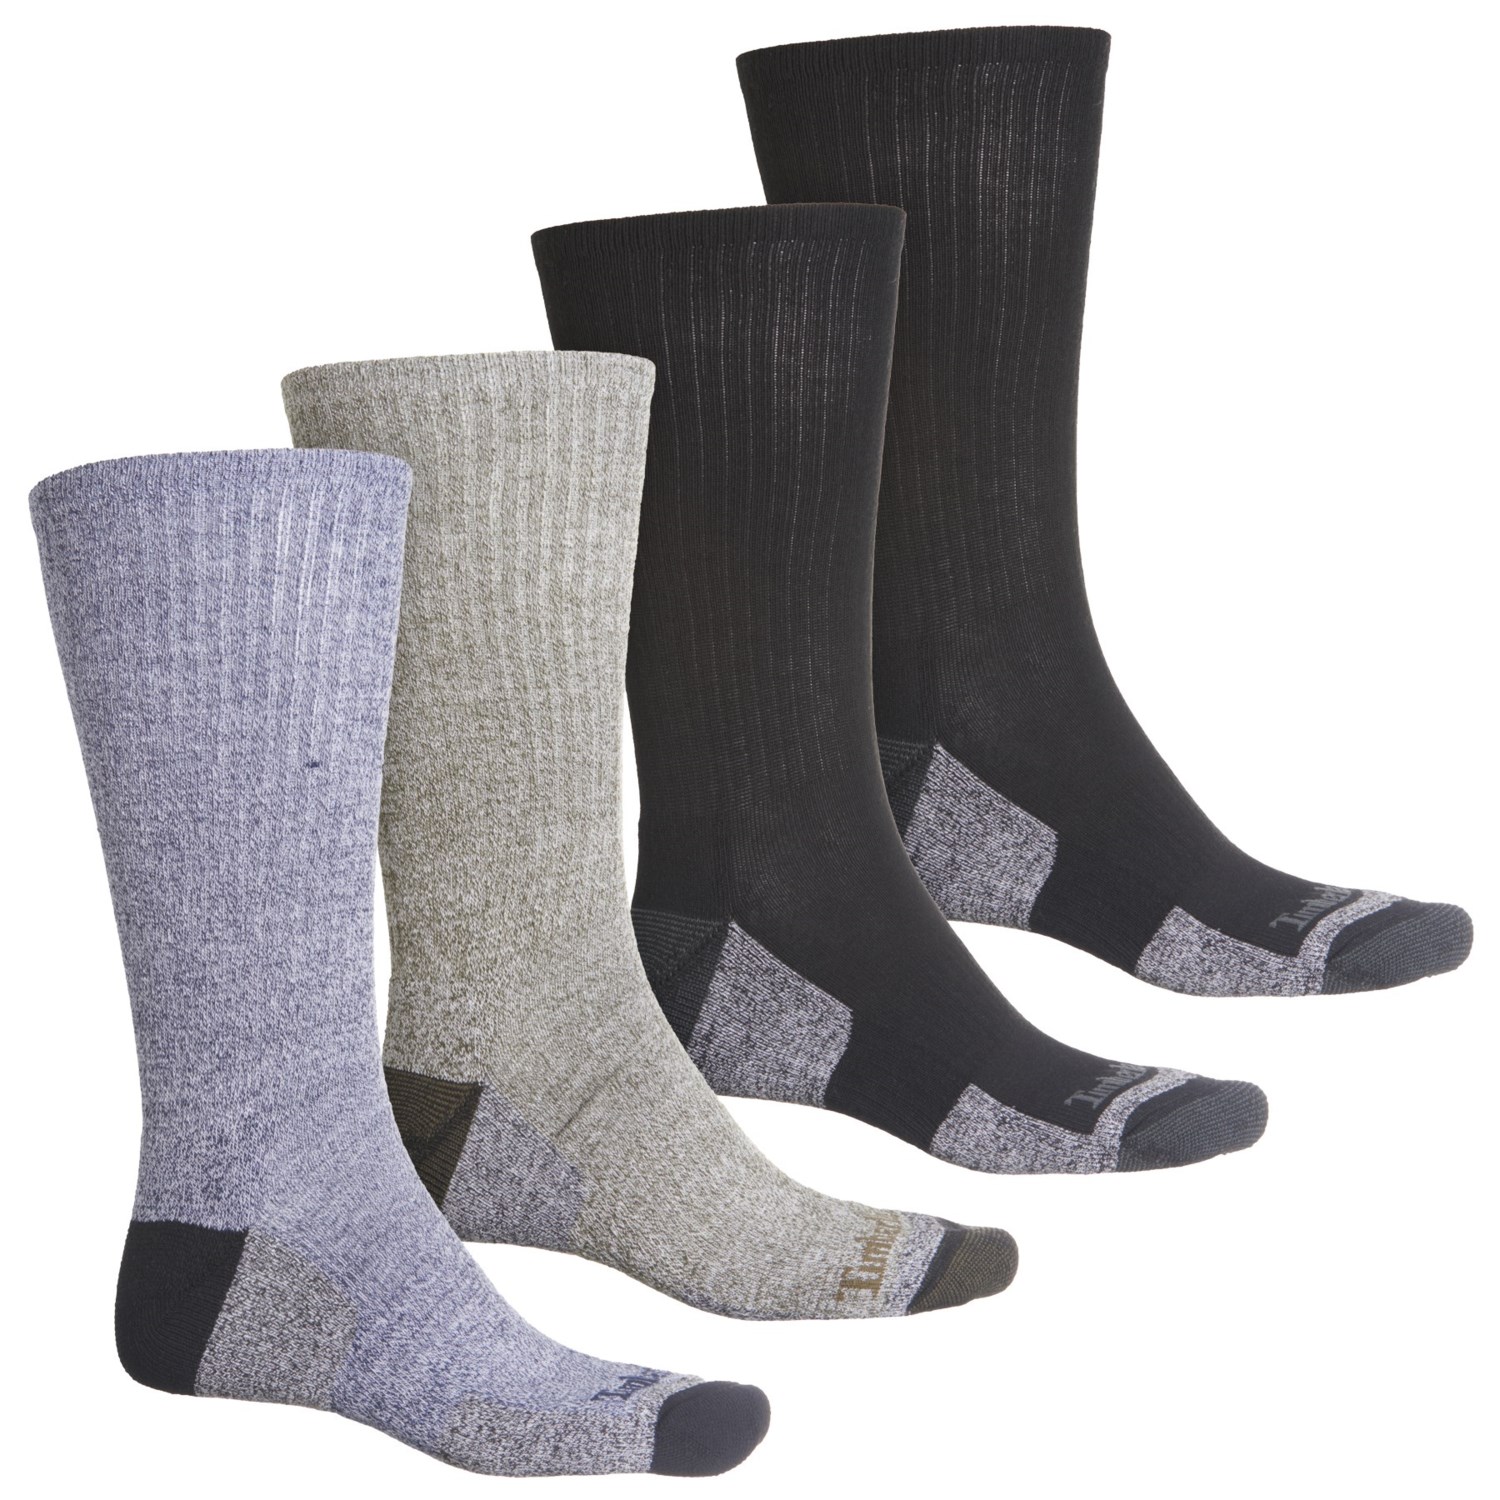 timberland mens socks